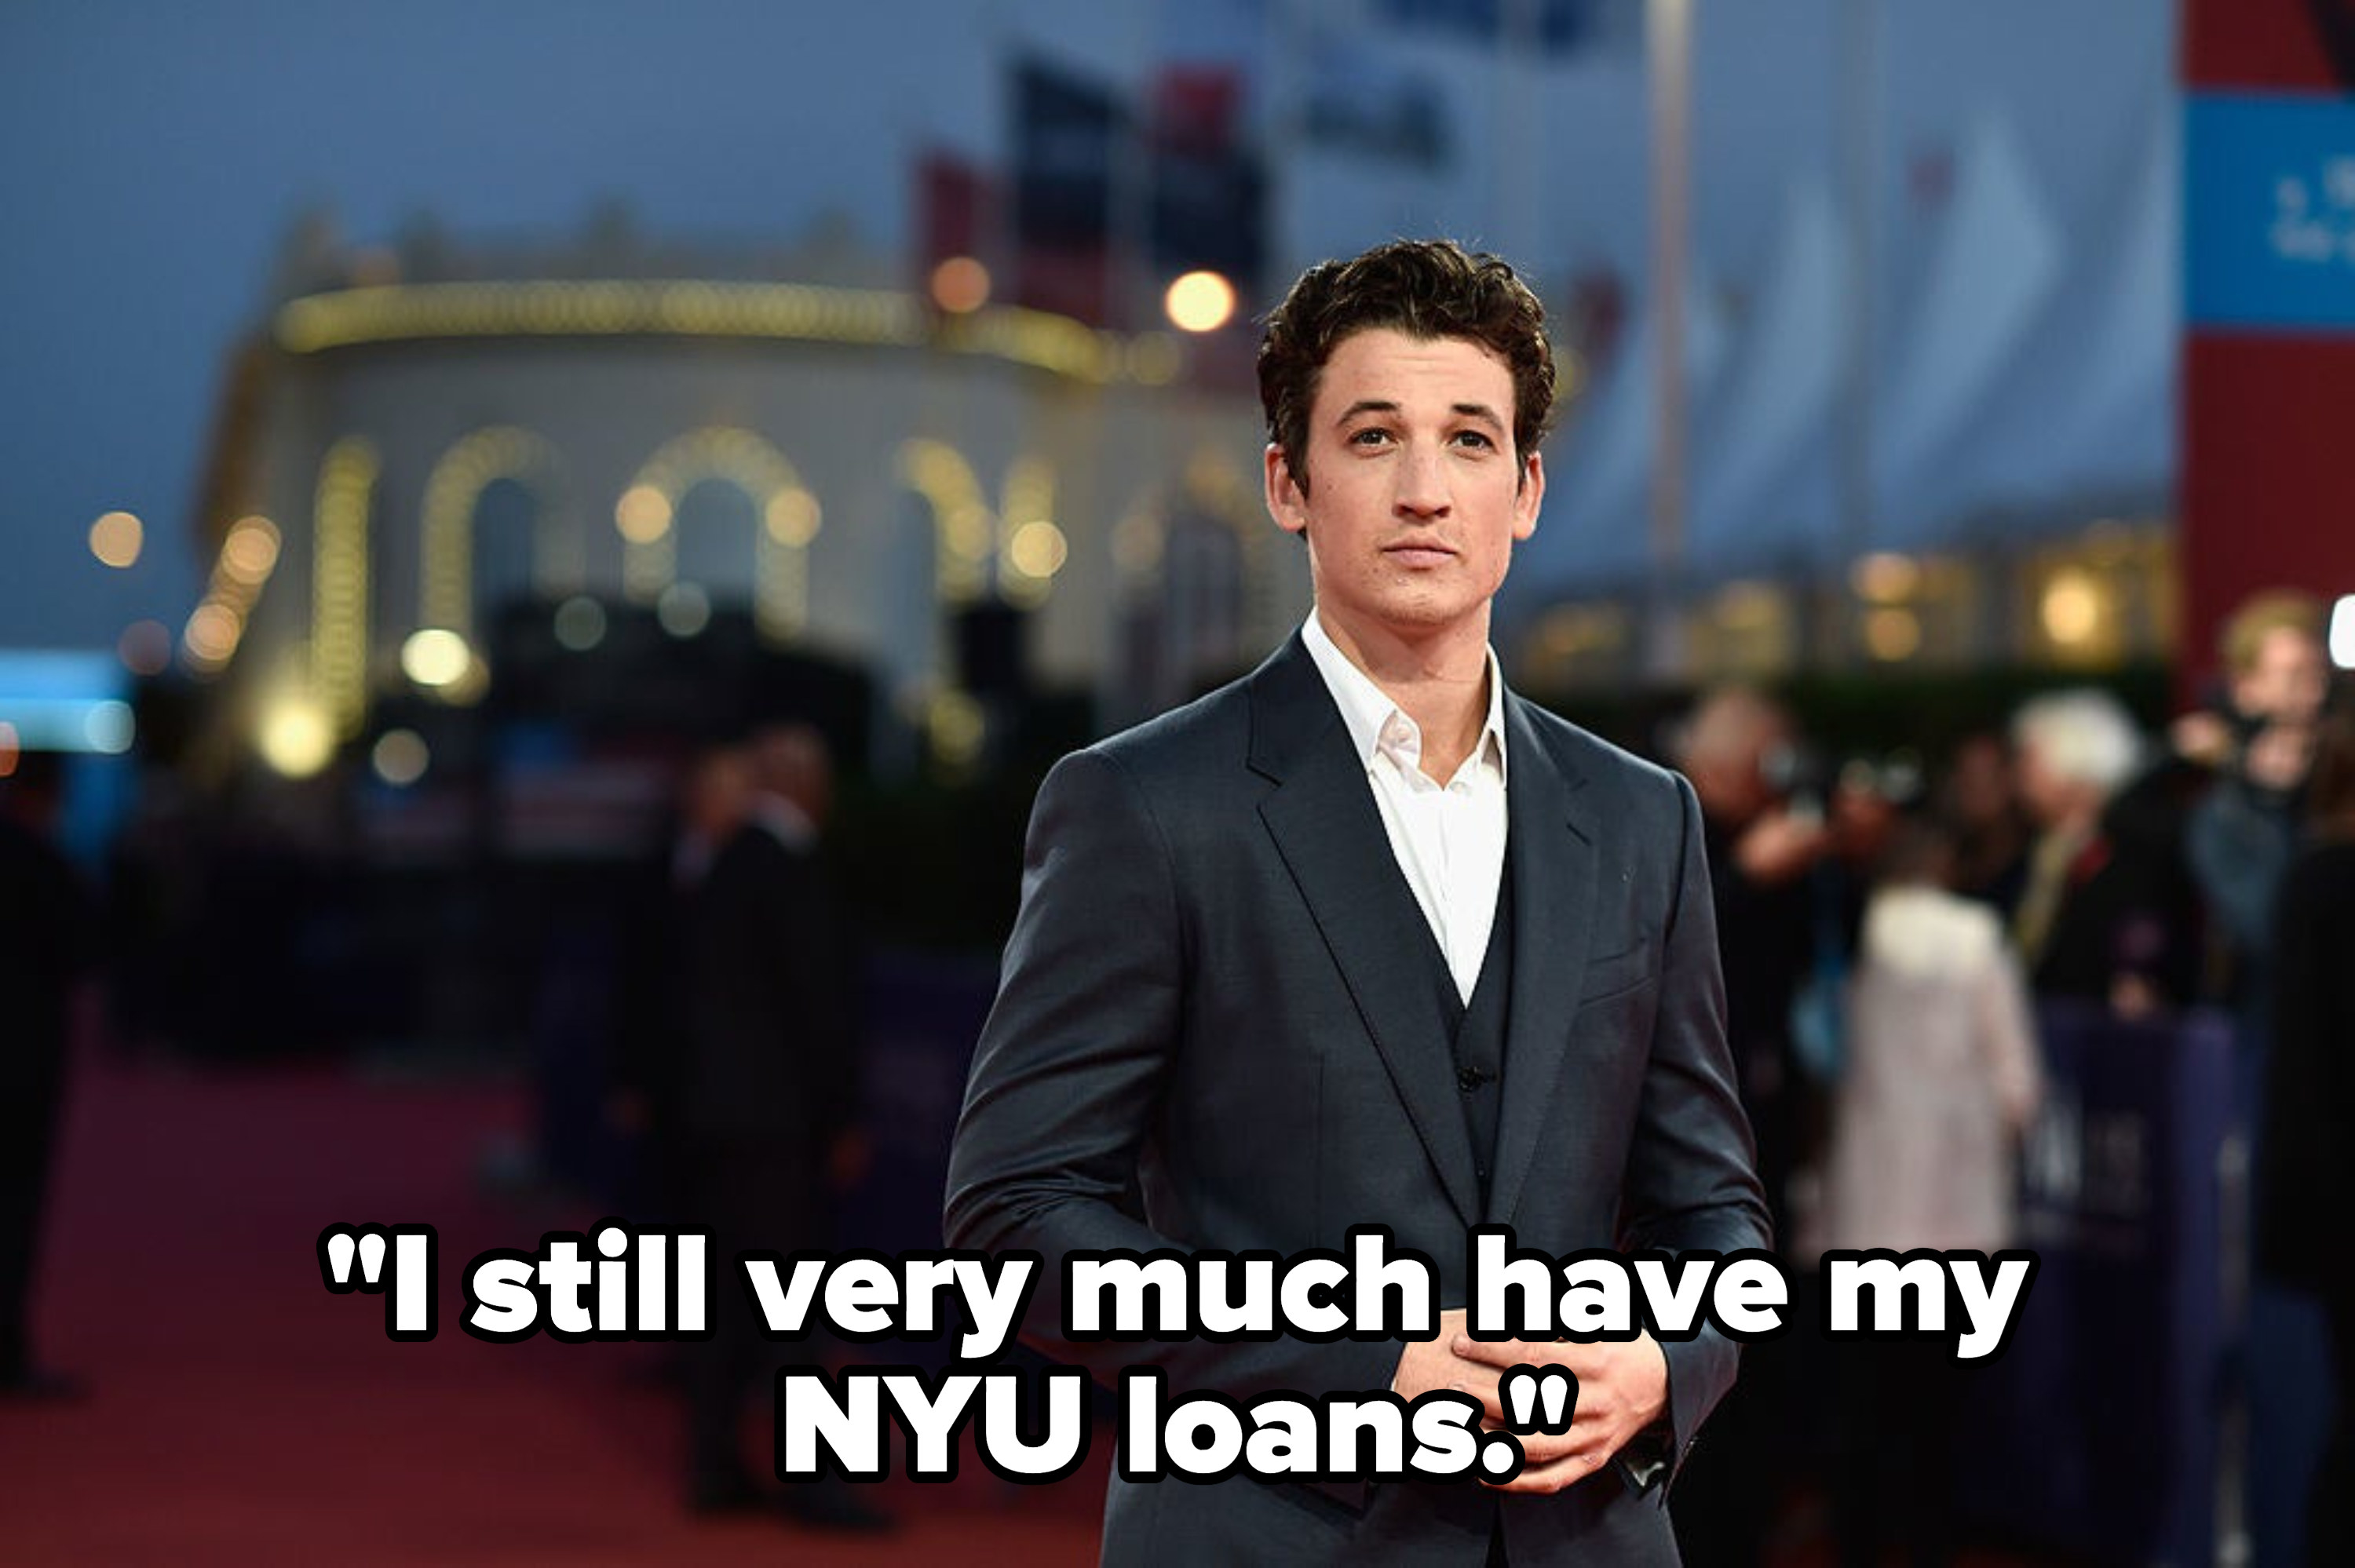 Caption: I still very much have my NYU loans